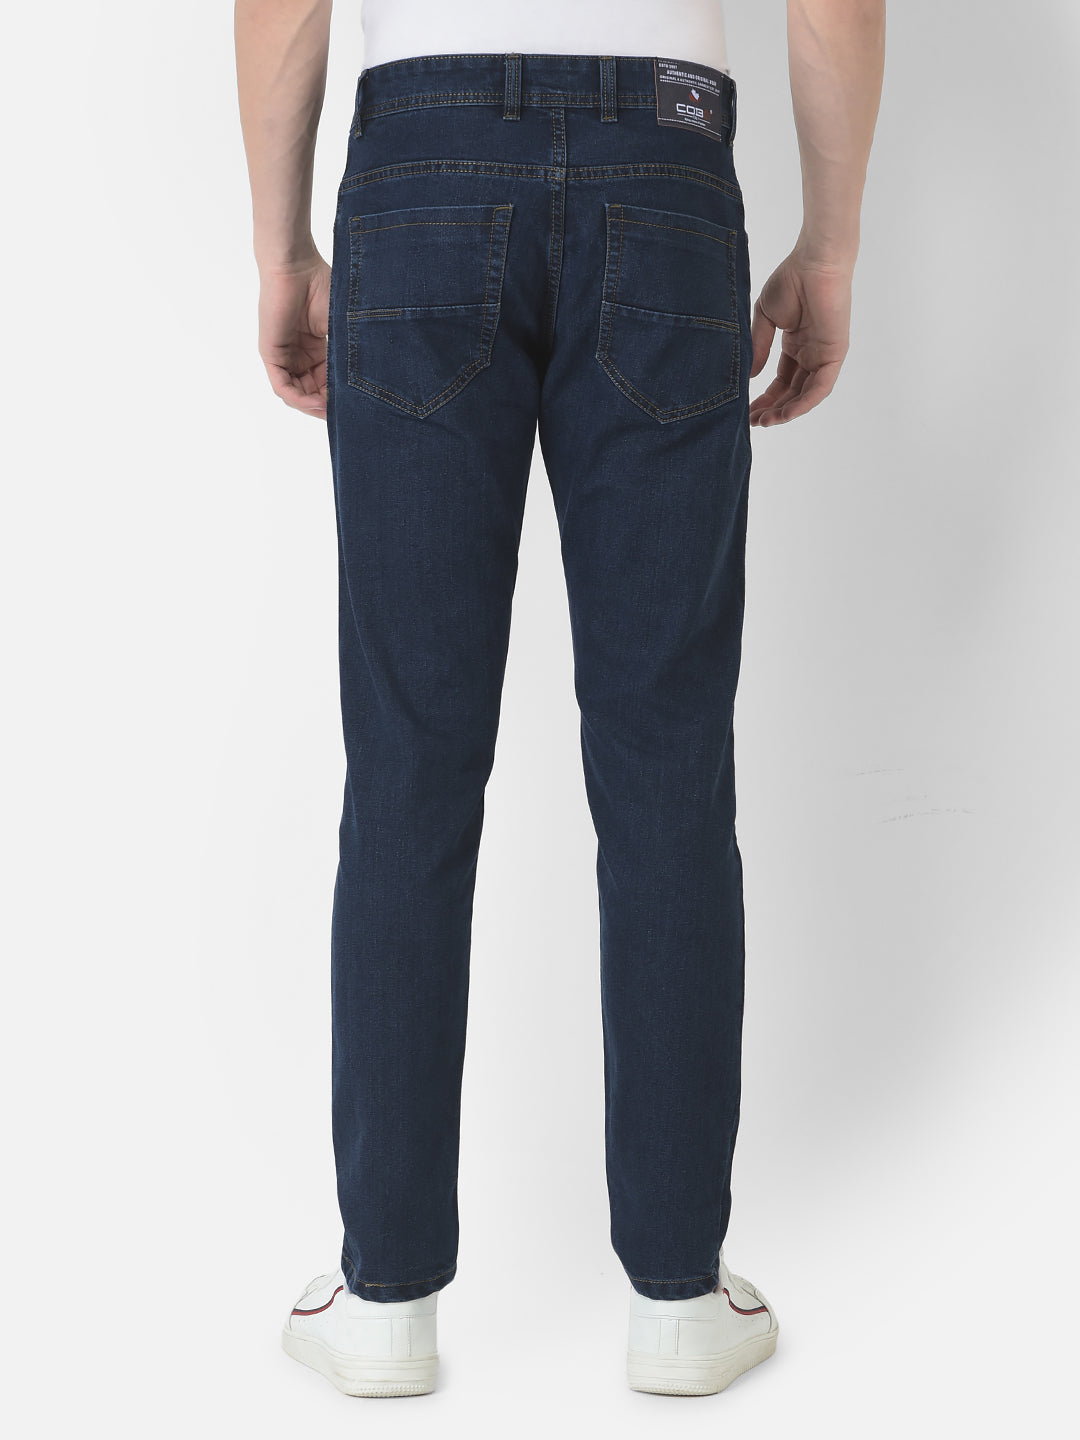 Cobb Navy Blue Narrow Fit Jeans